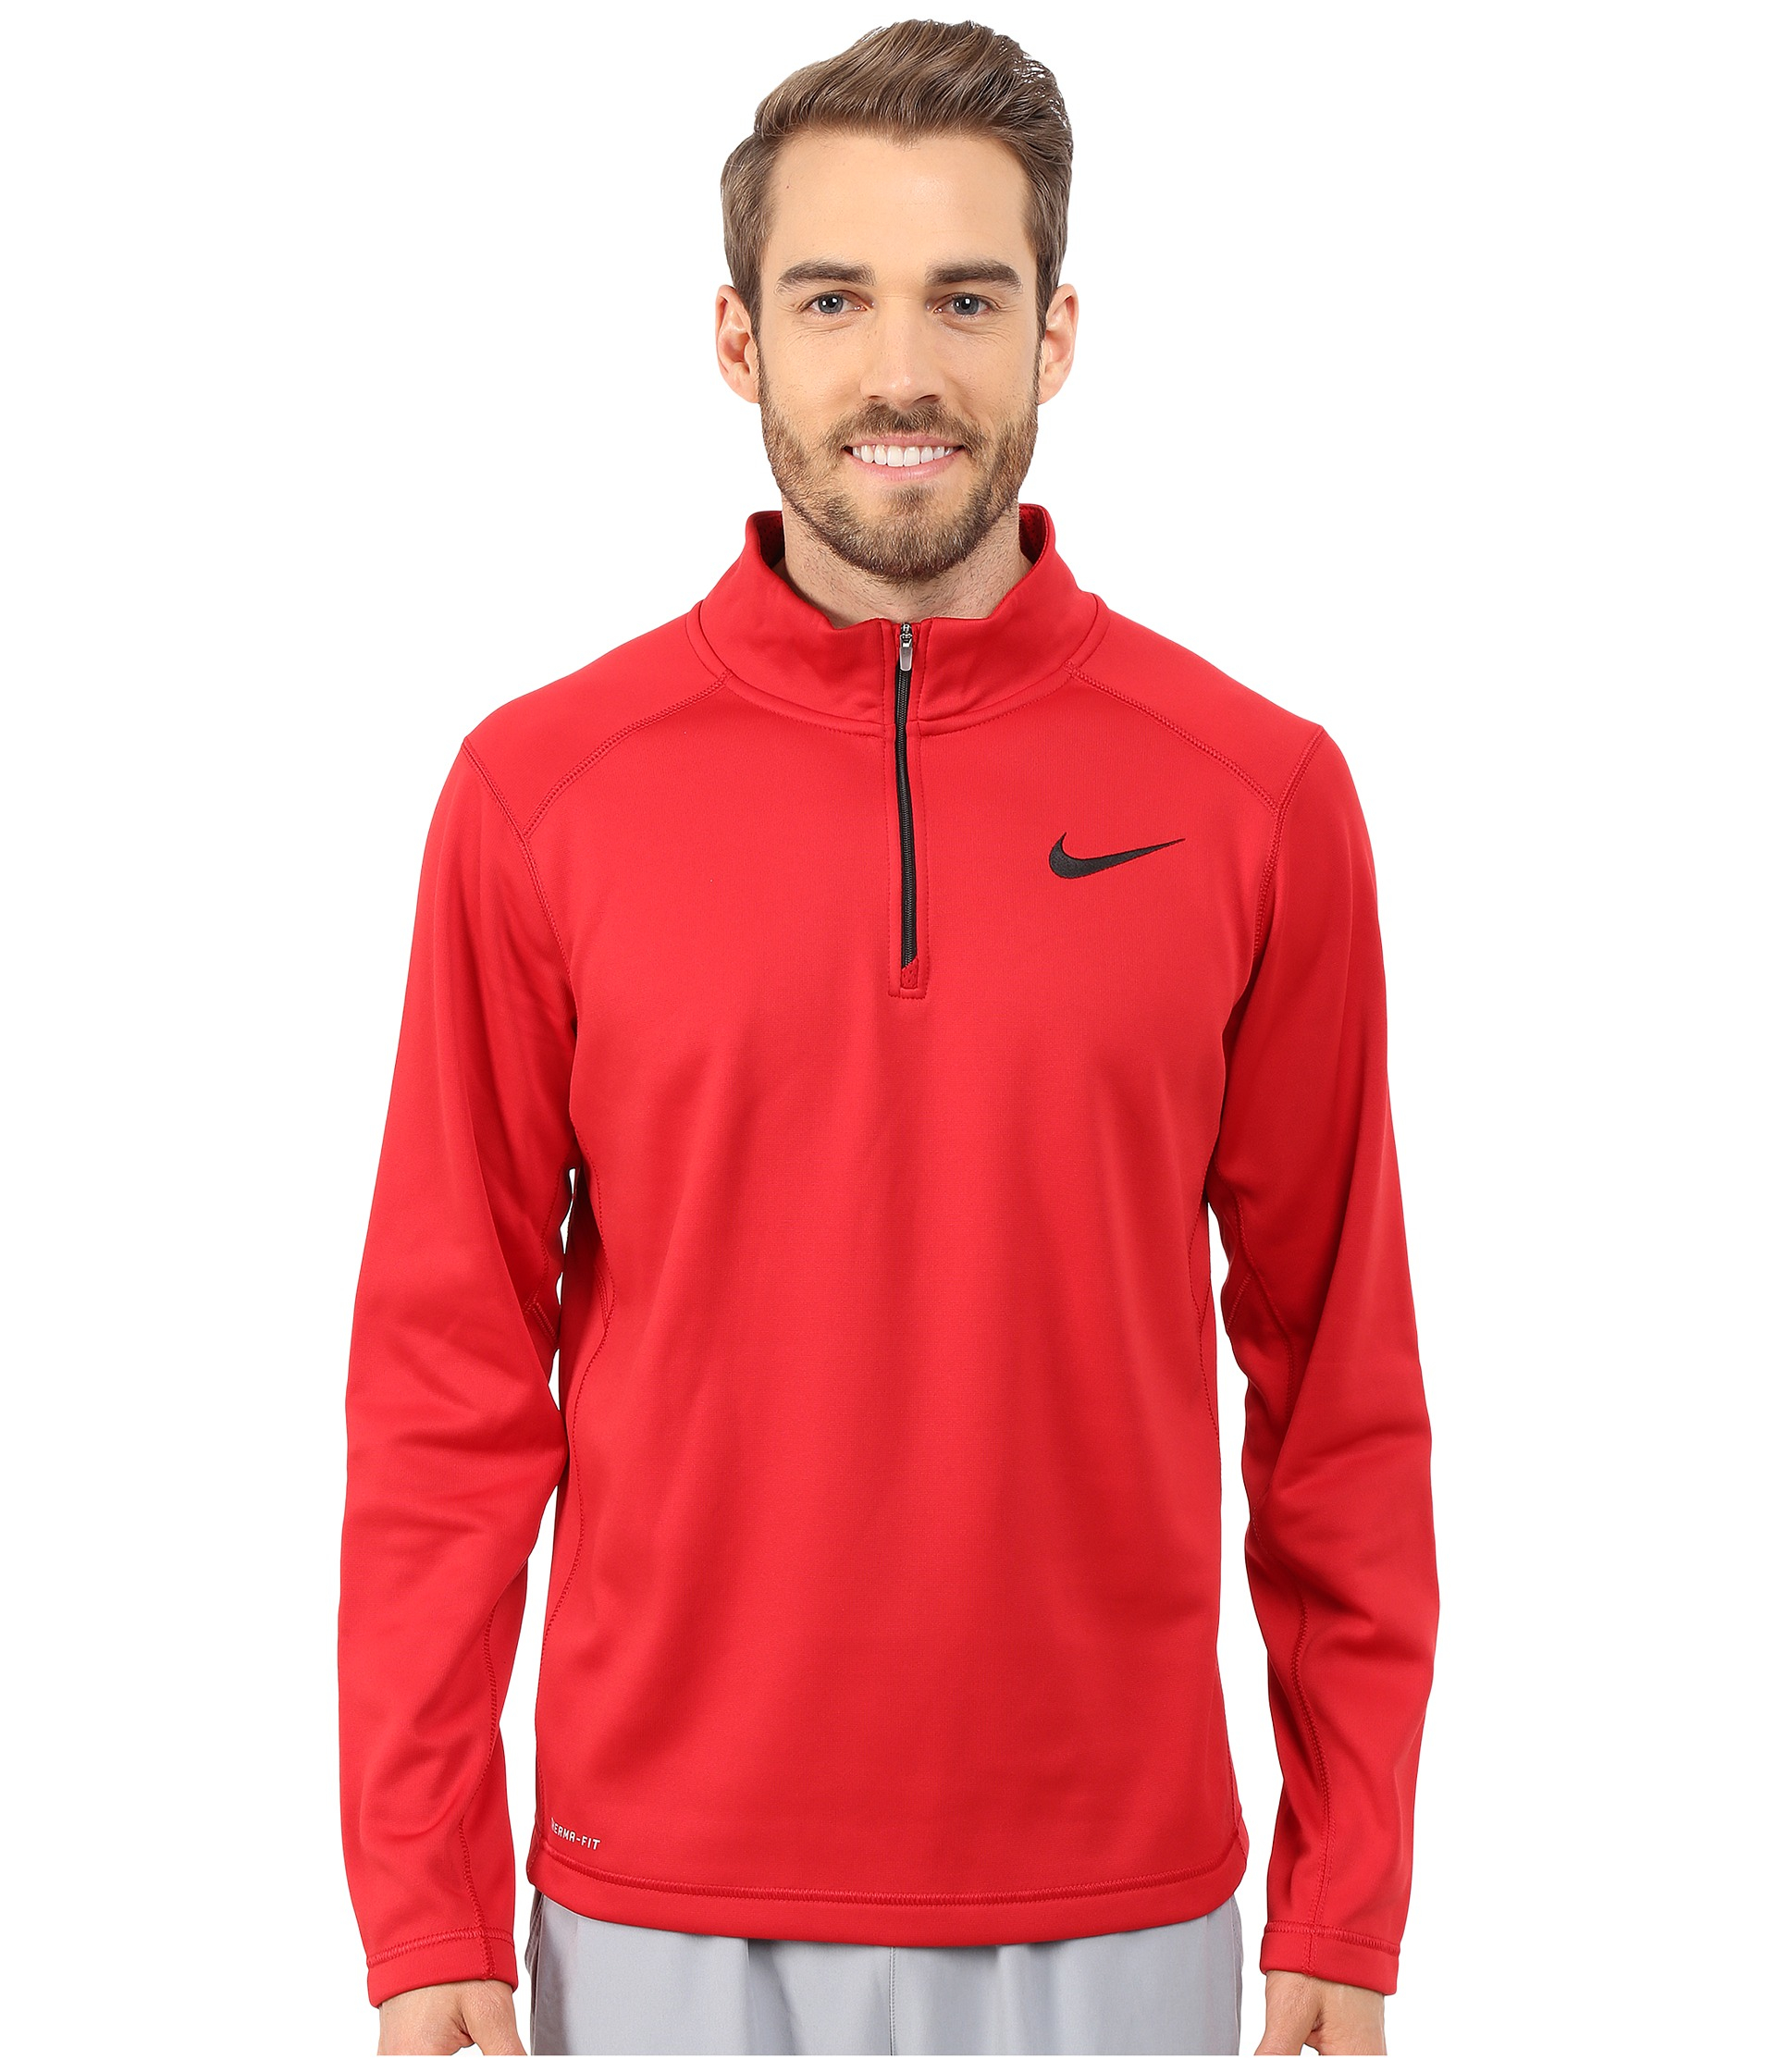 Nike Ko 1/4 Zip Top in Red for Men - Lyst